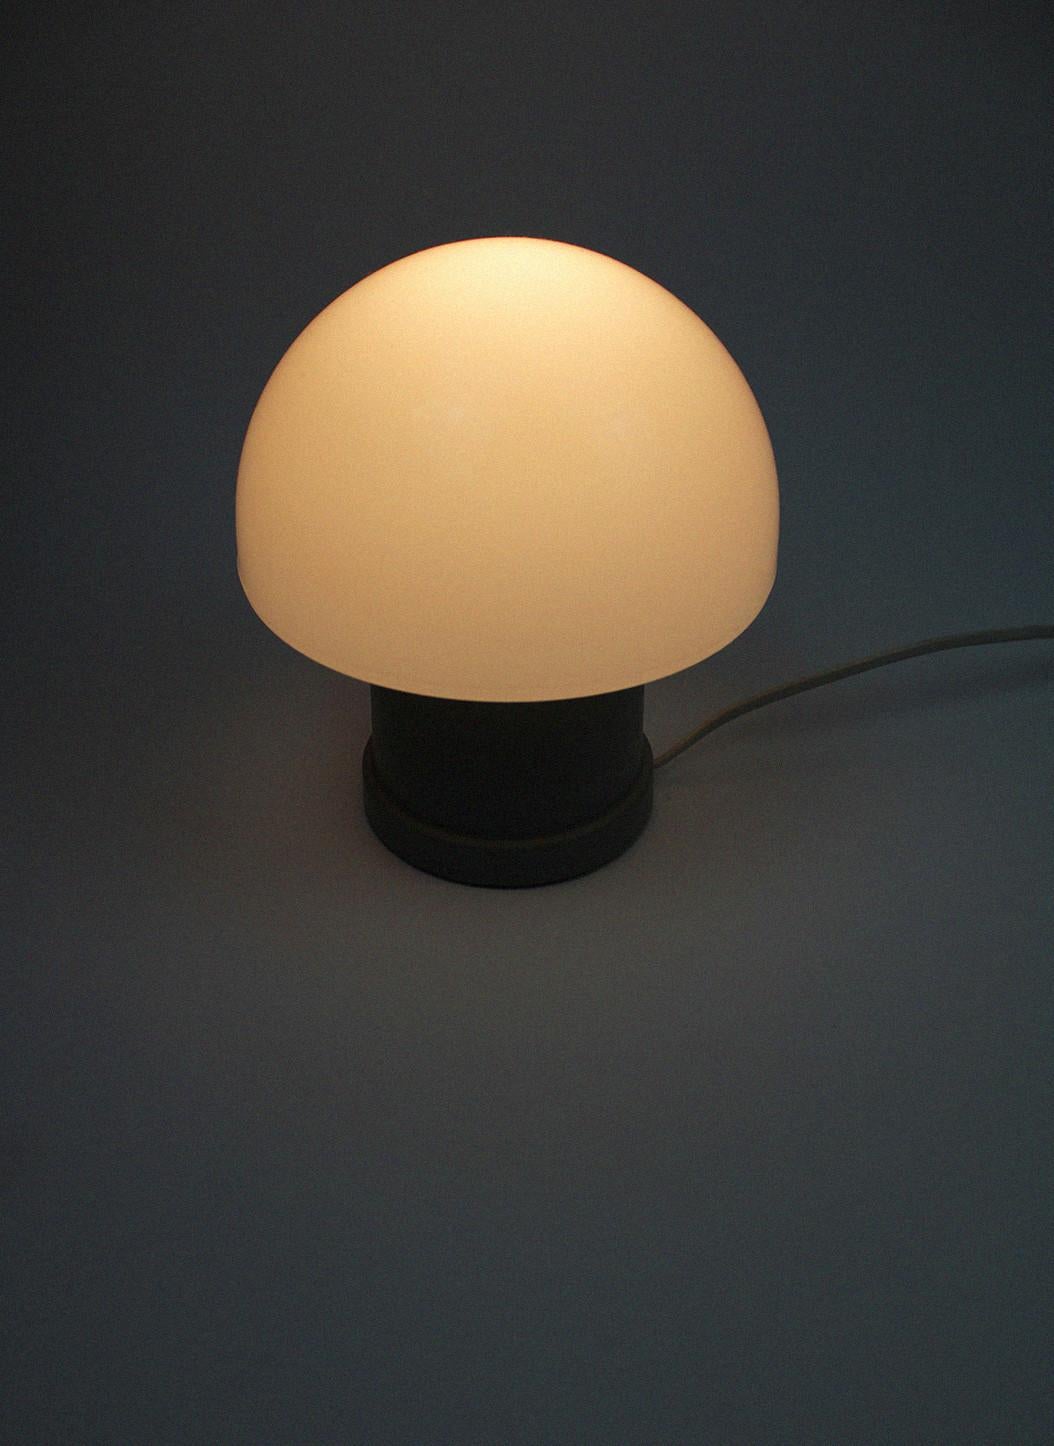 mushroom lamp from the 70s